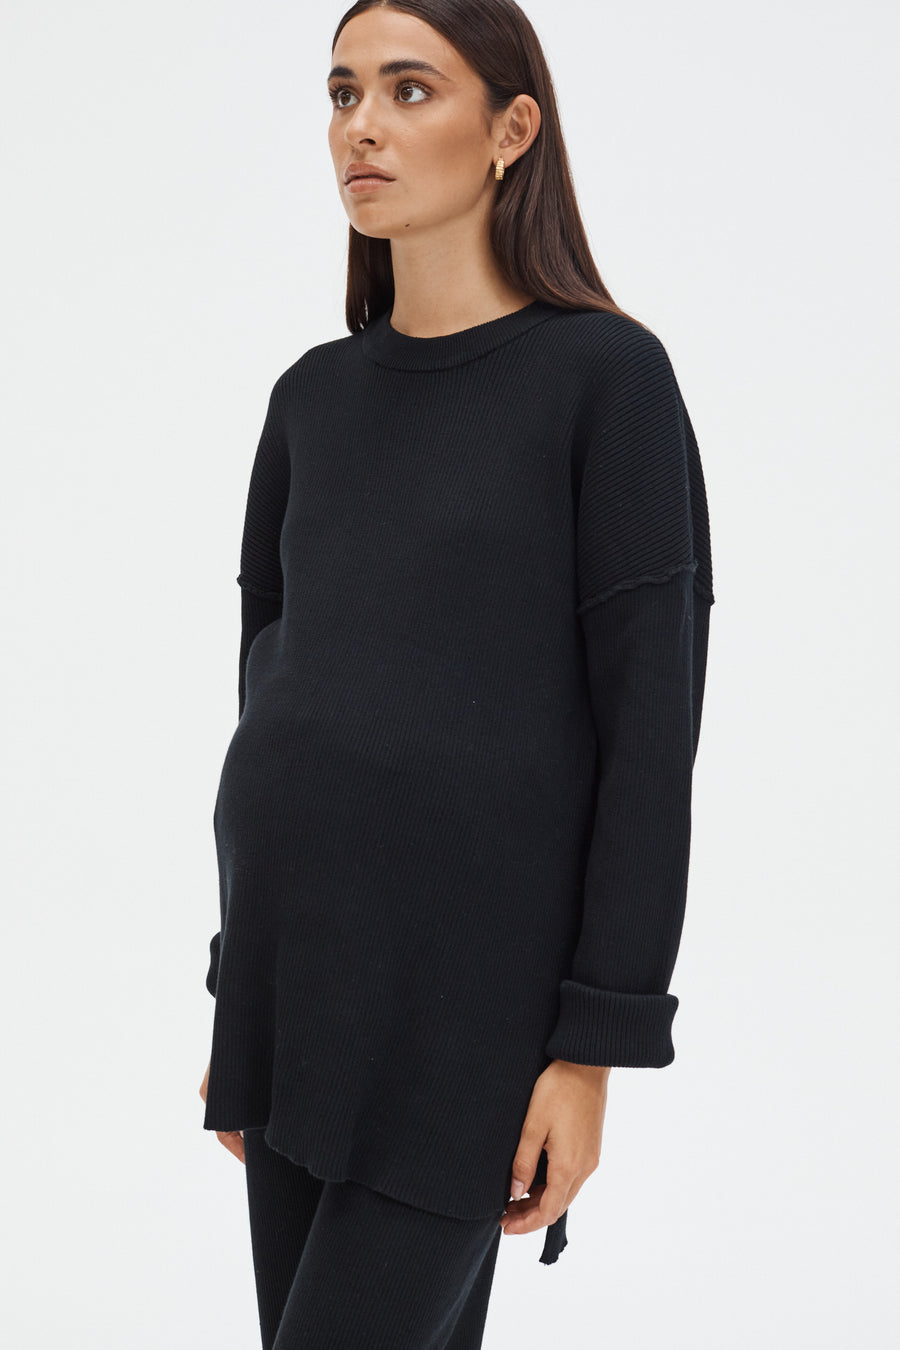 Designer Maternity Jumper (Black) 4